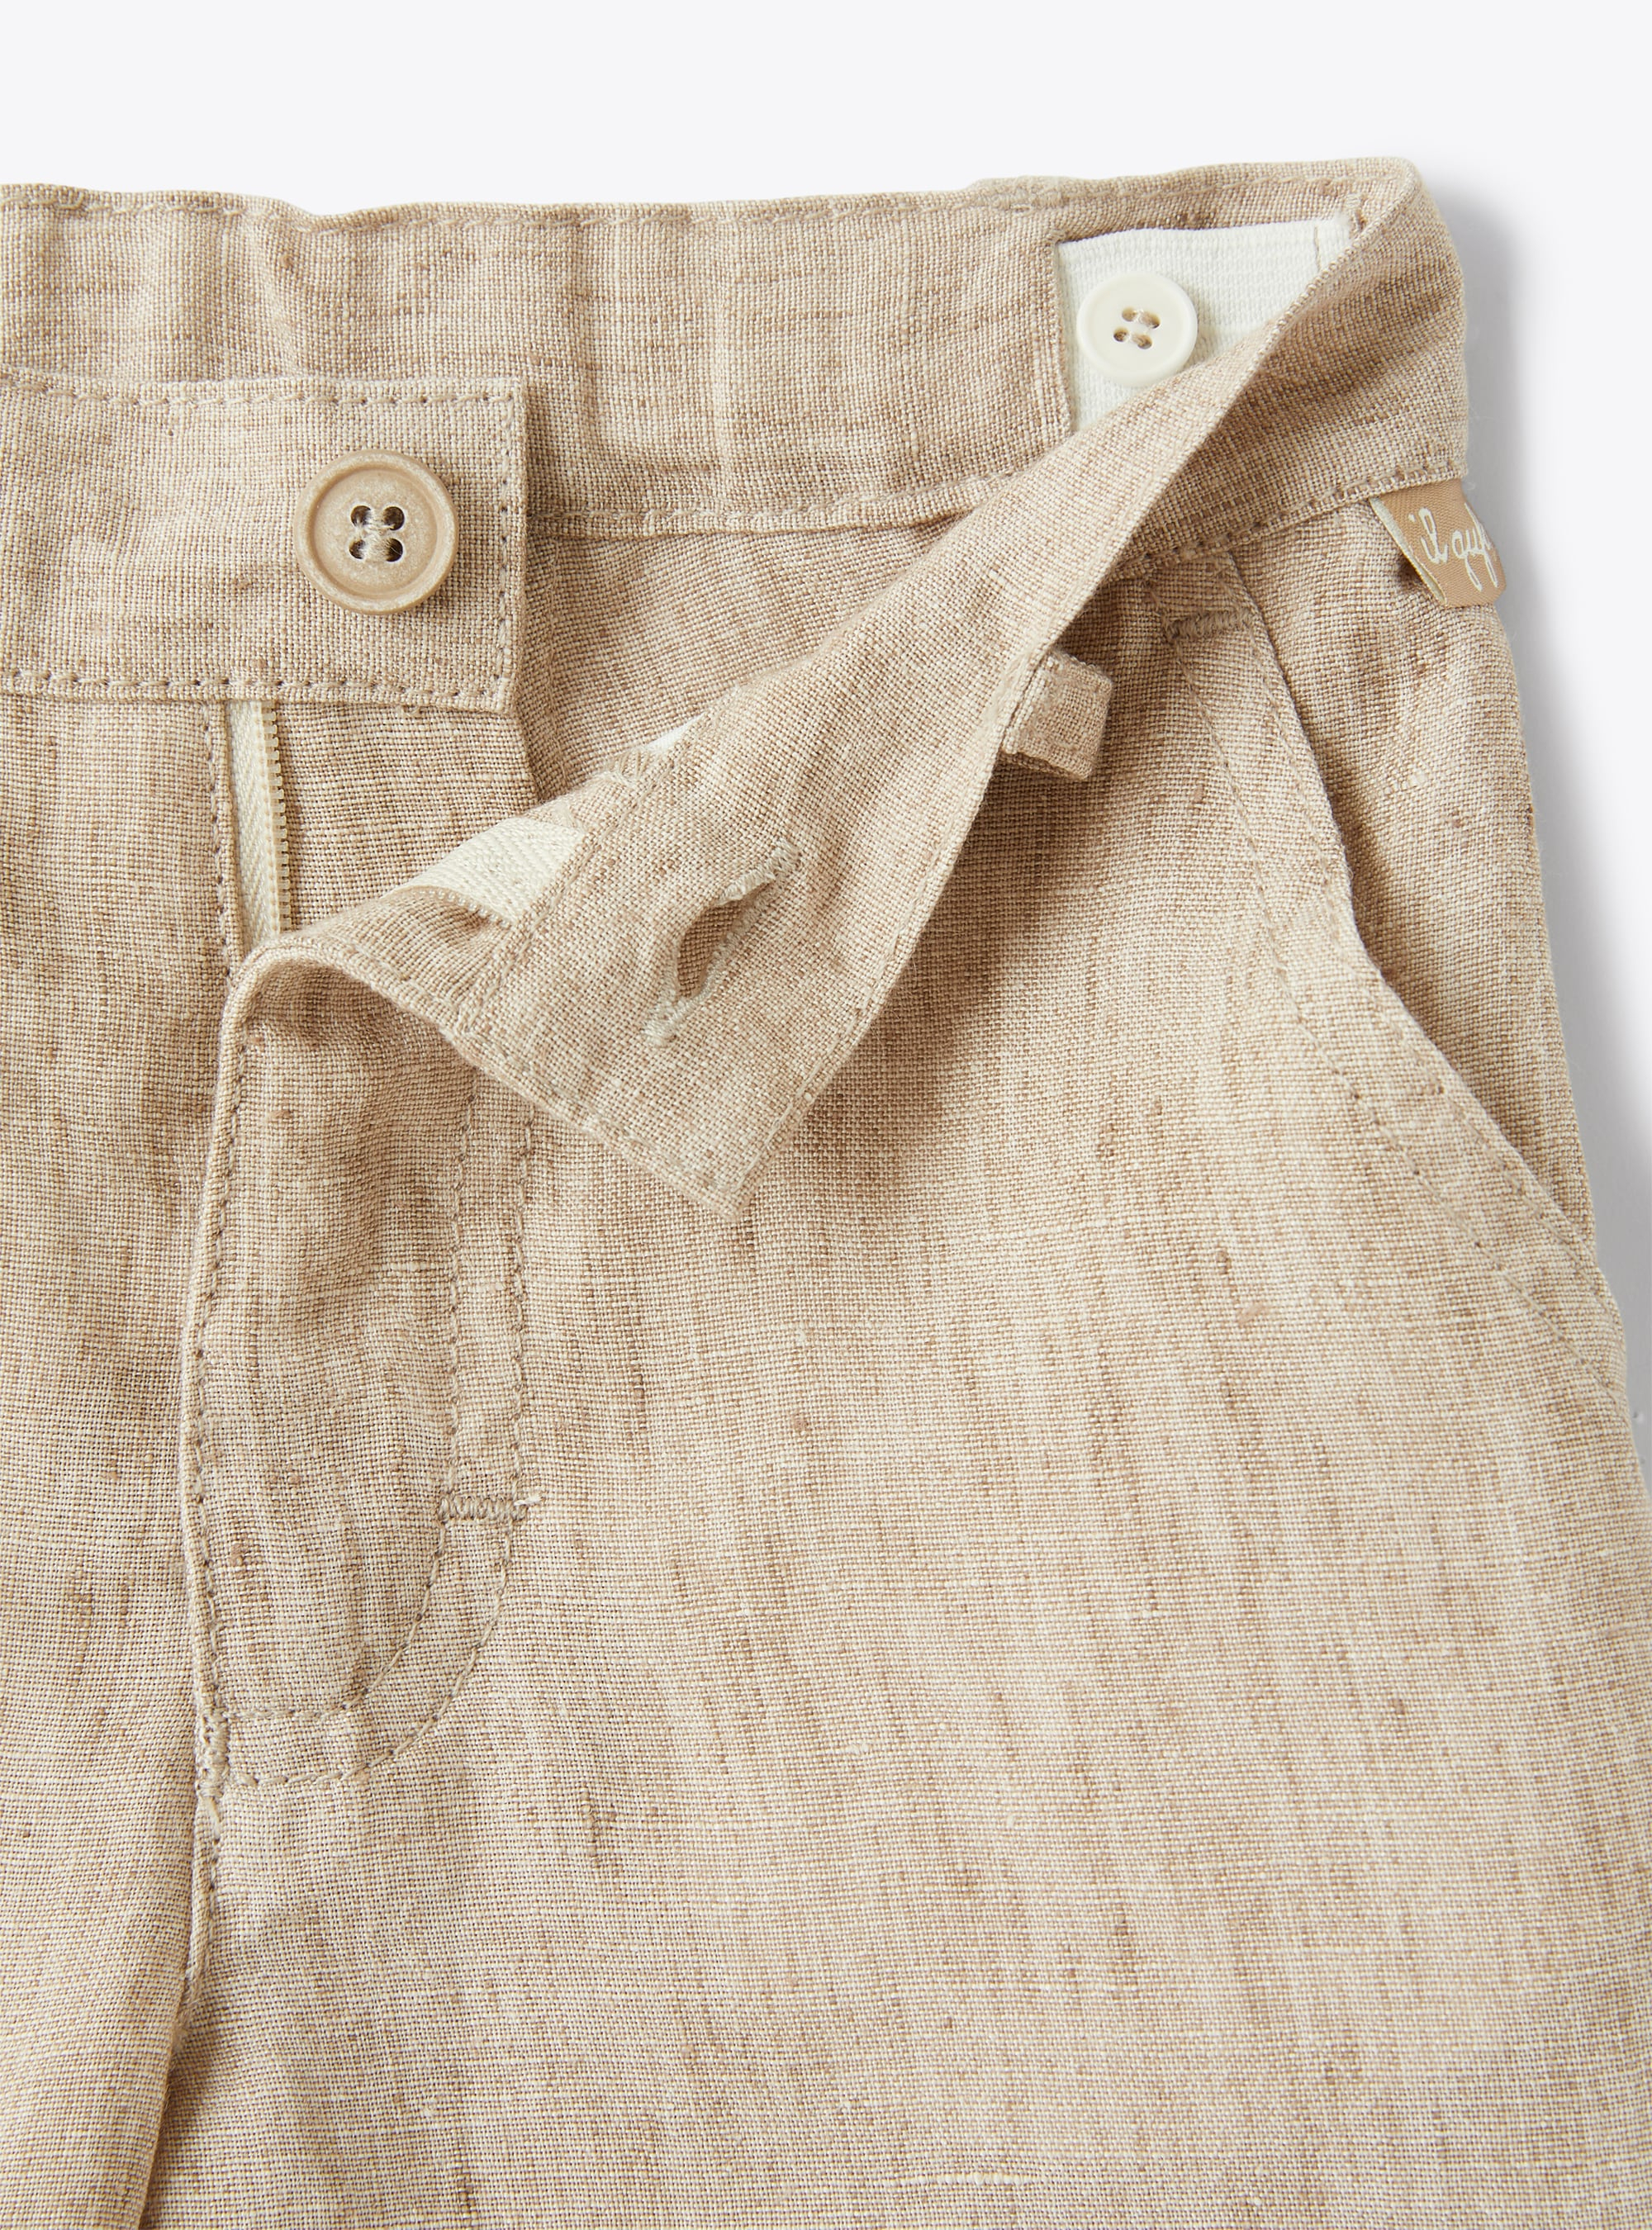 Bermuda shorts in beige-mélange linen  - Brown | Il Gufo